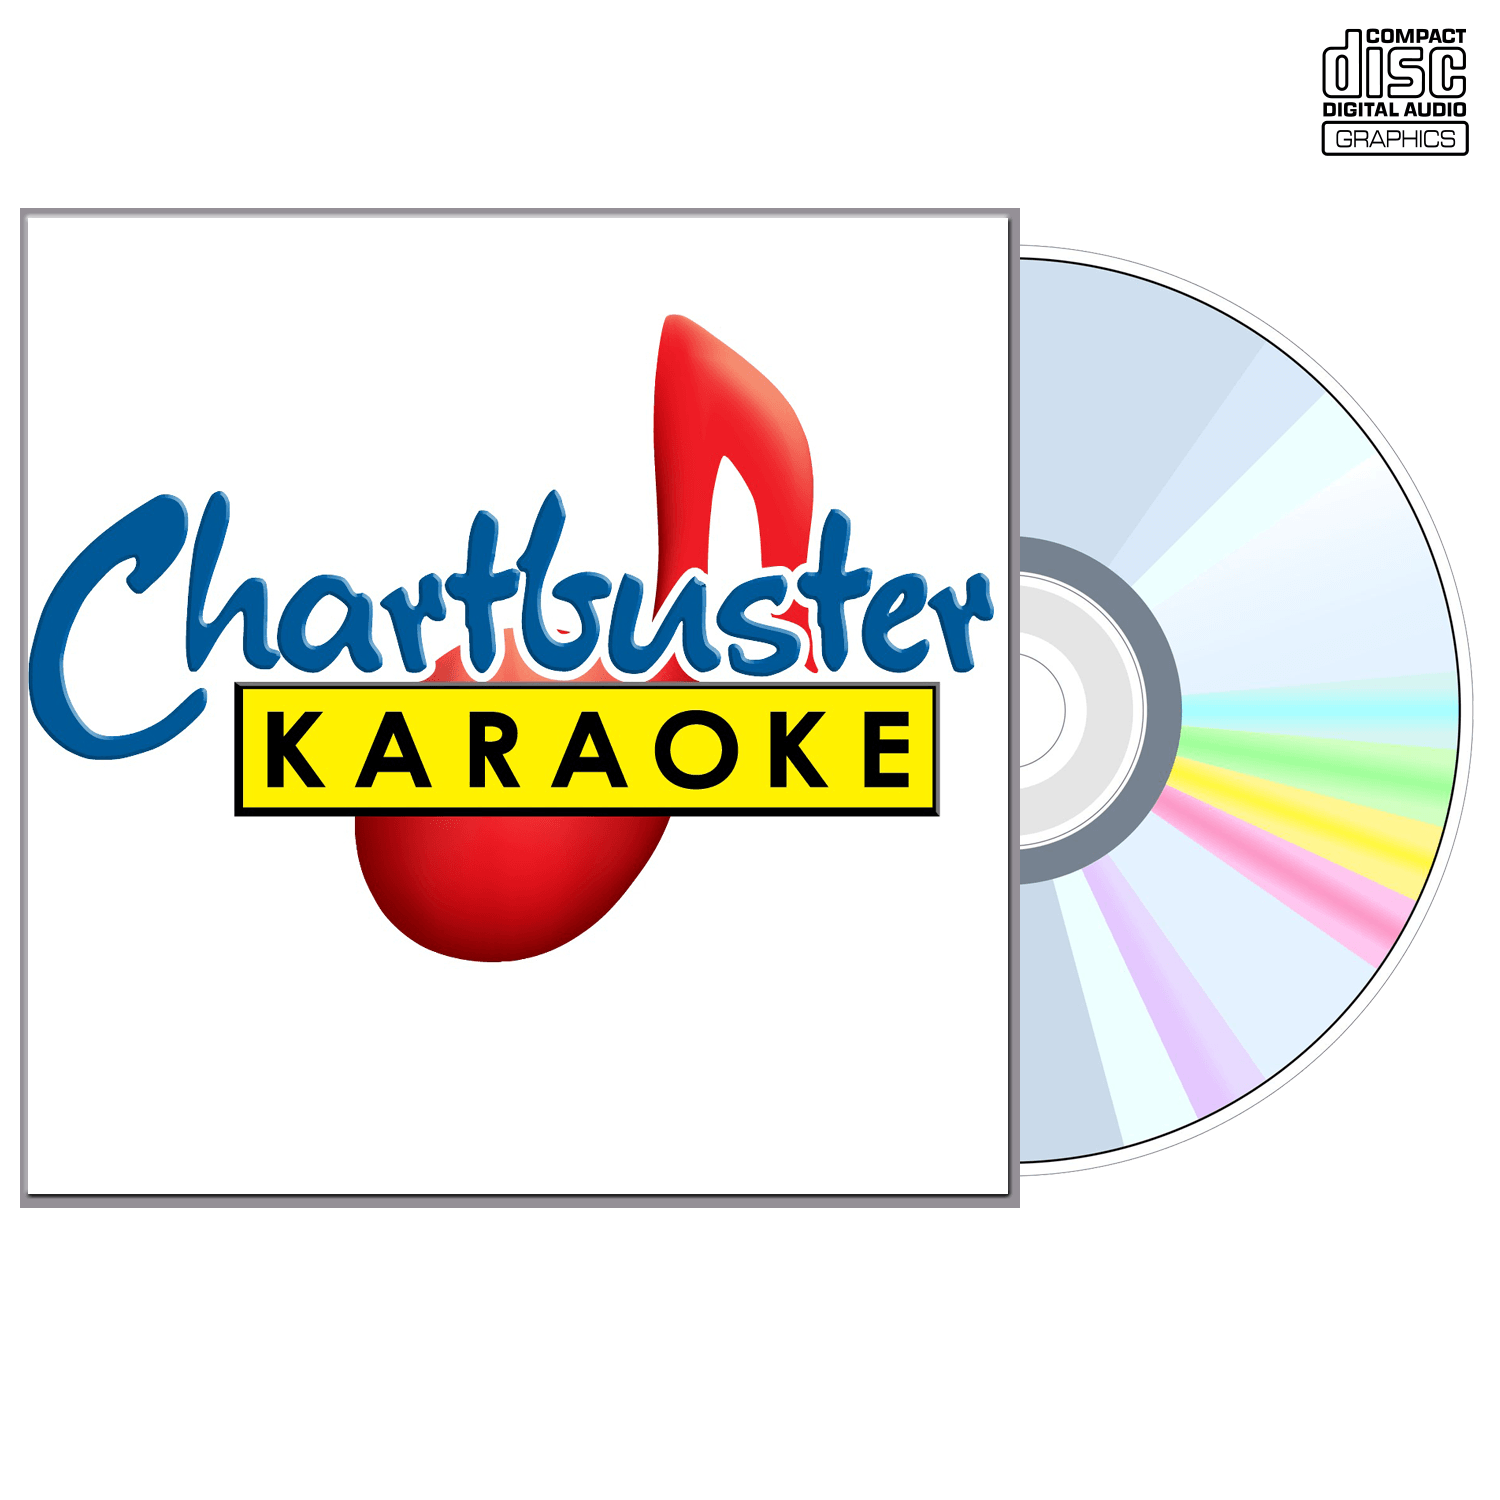 70's Collection Vol 02 - CD+G - Chartbuster Karaoke - Karaoke Home Entertainment